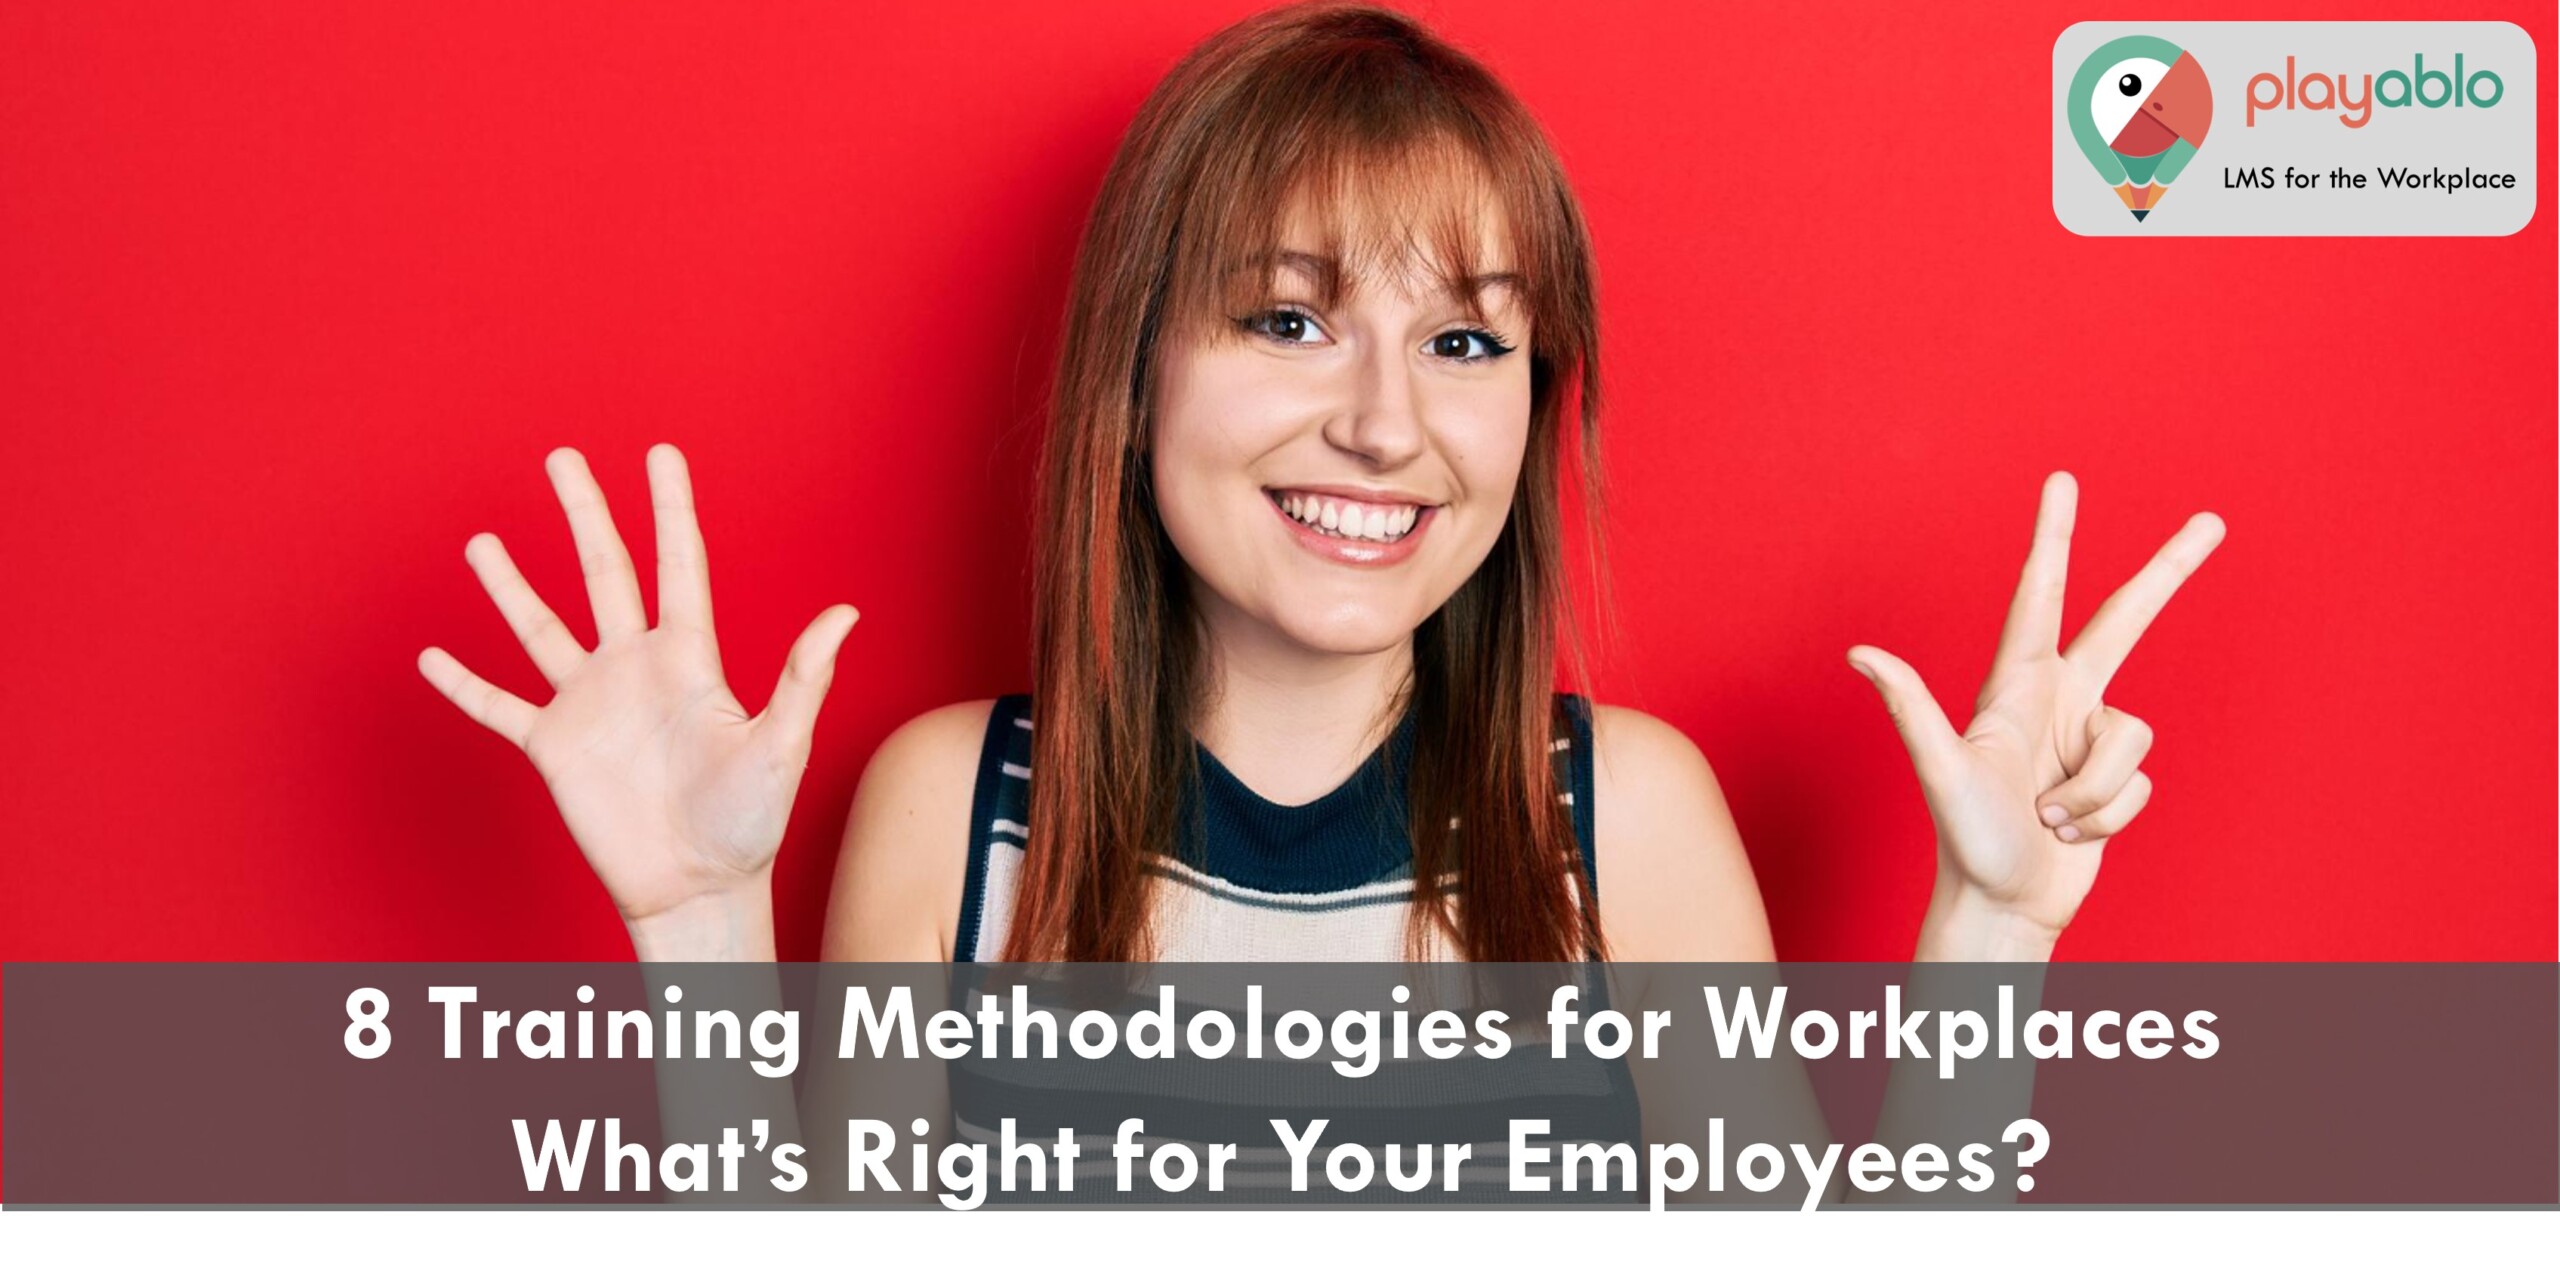 Employee Training Methodologies